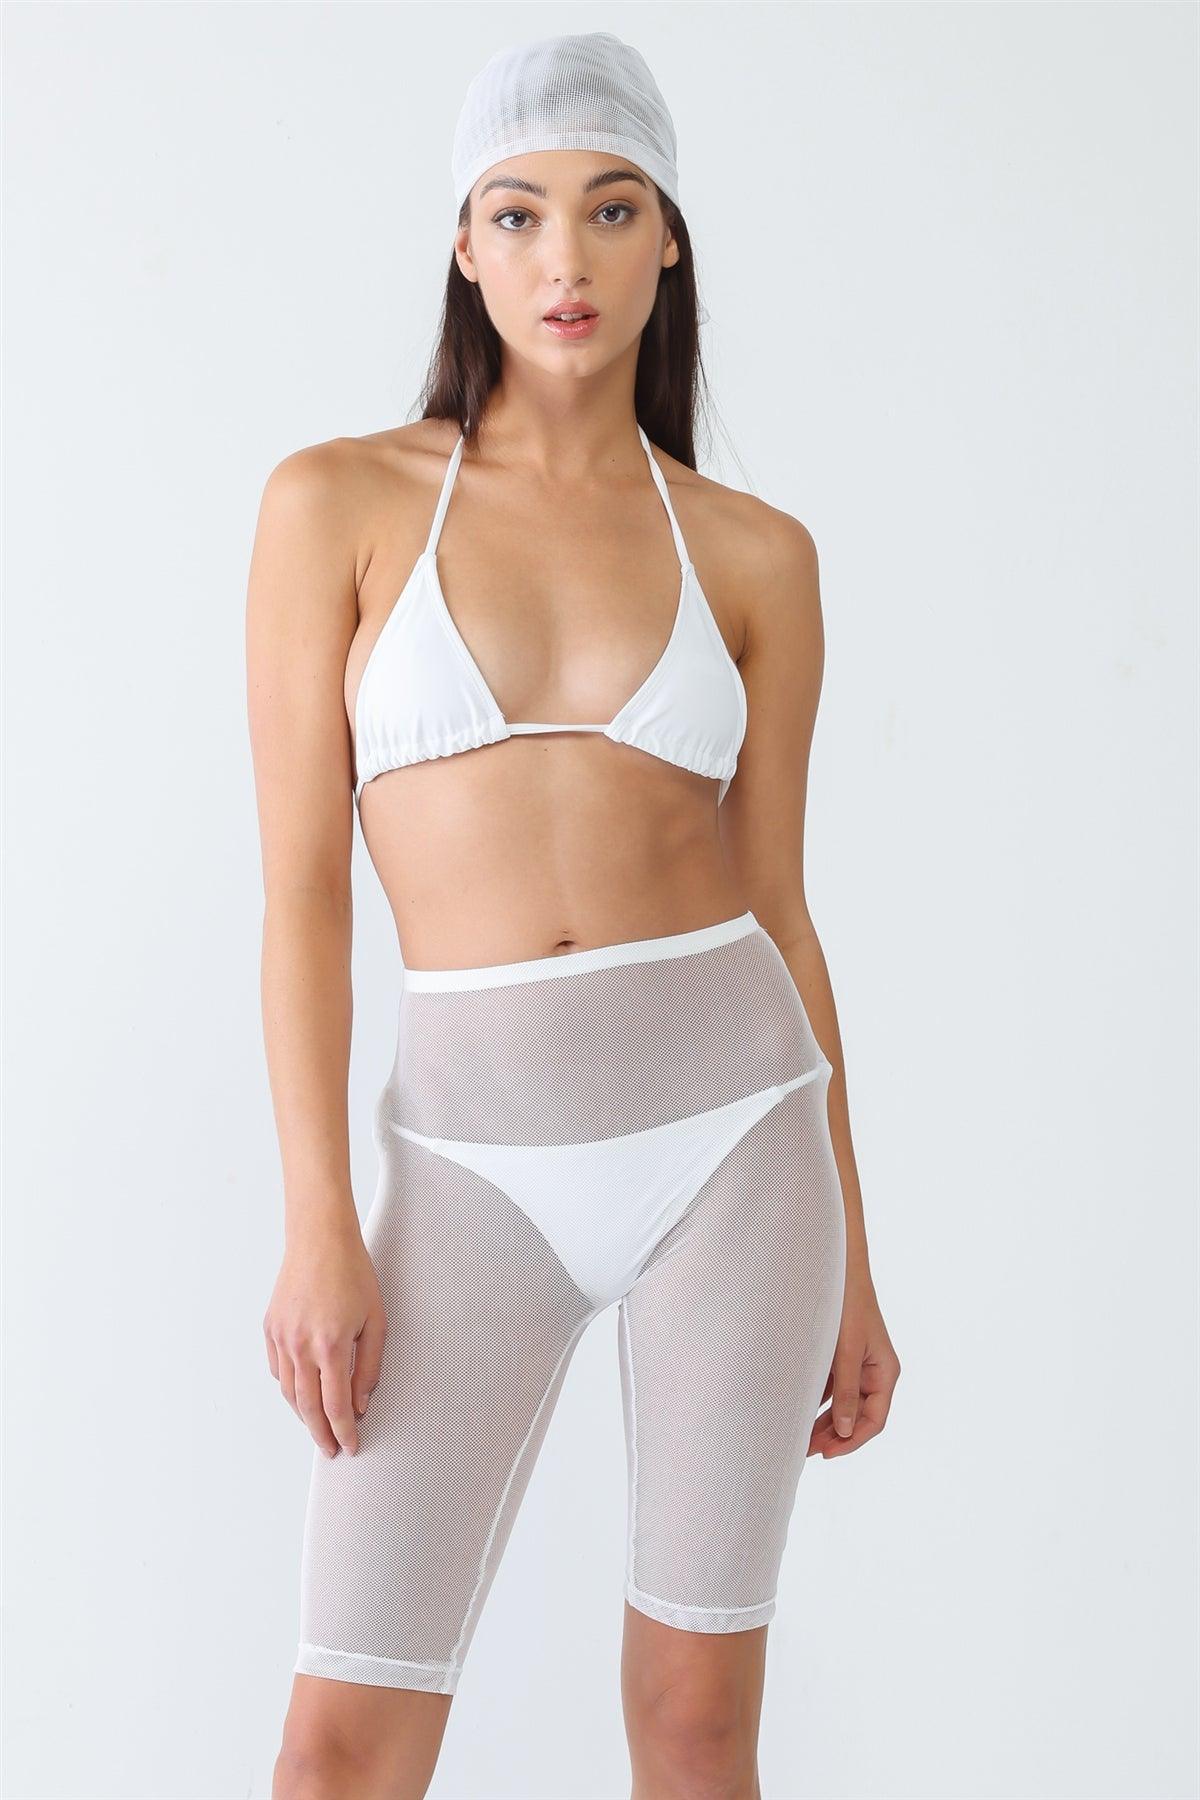 White Triangle Shape Self-Tie Top & Self-Tie Sides Bottom Bikini & Mesh Shorts & Headscarf /Four Piece Set